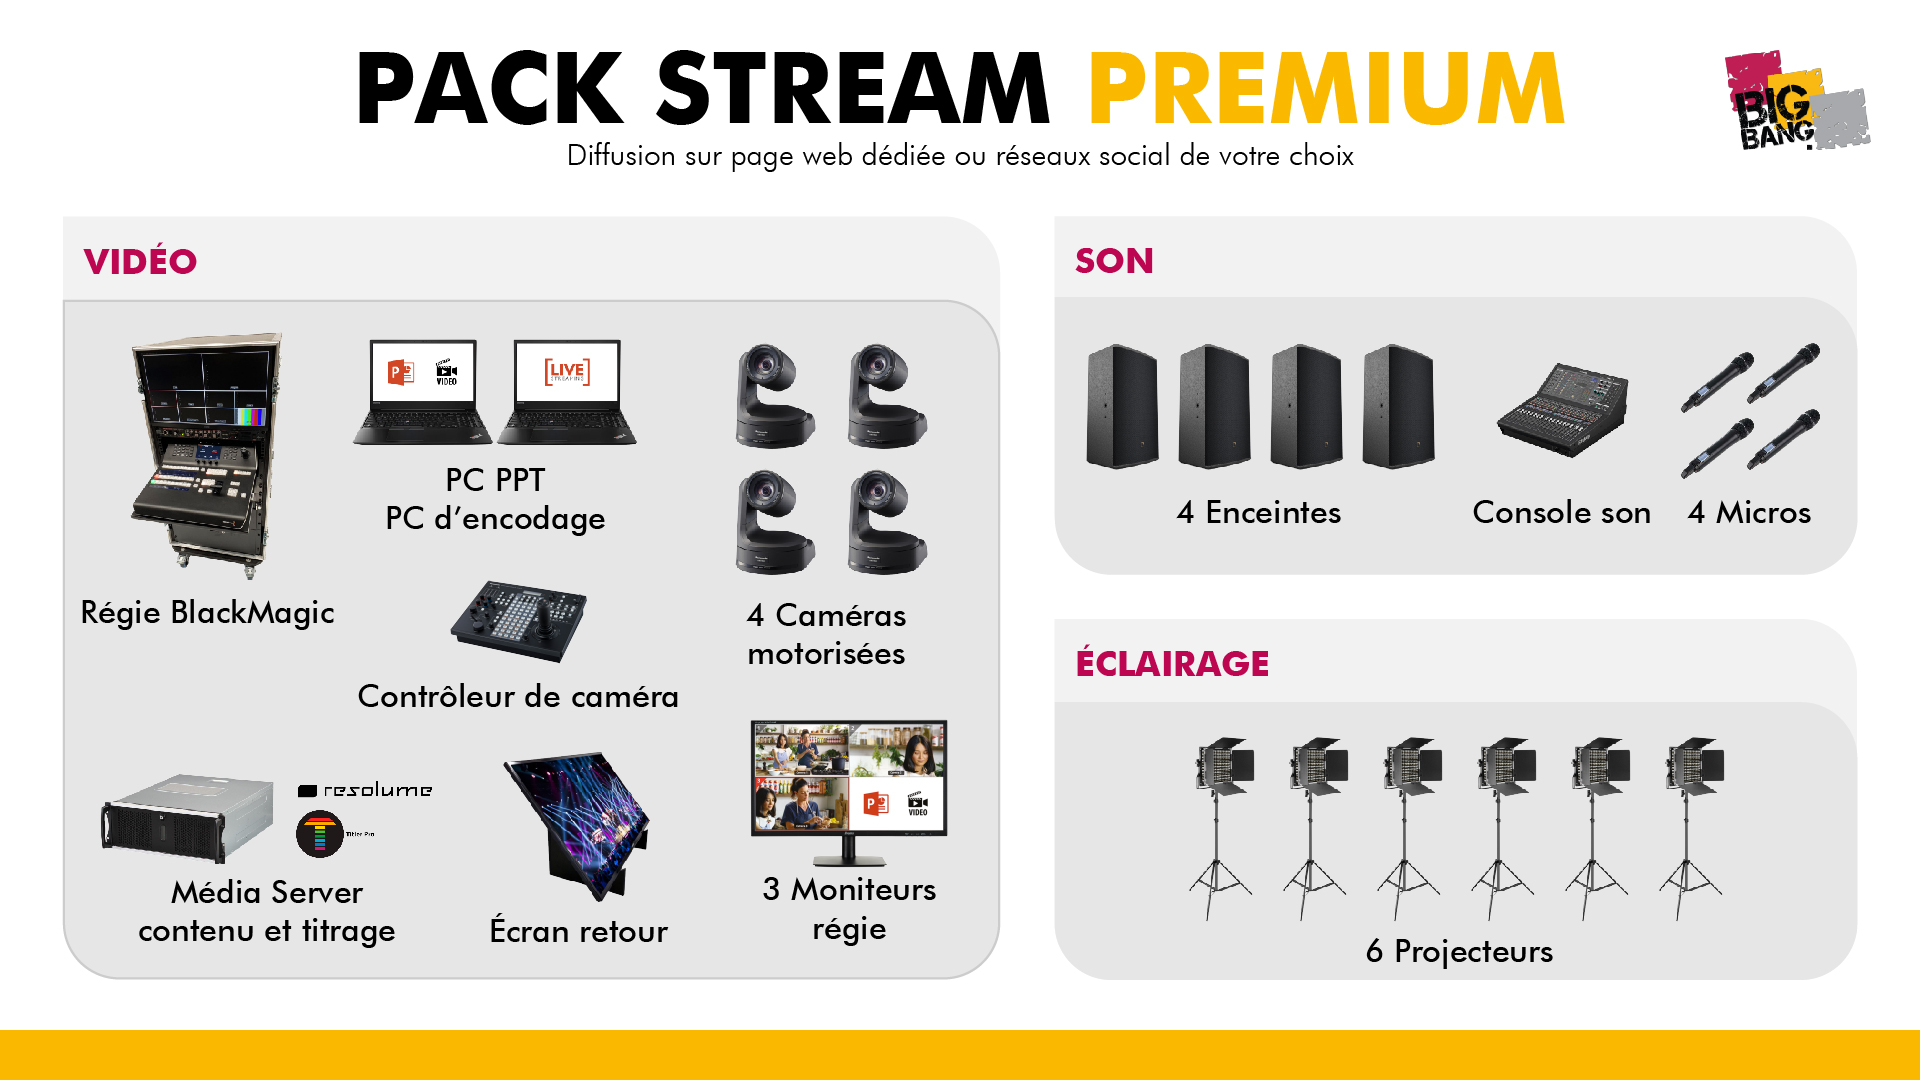 Big Bang Event - Pack Stream Premium